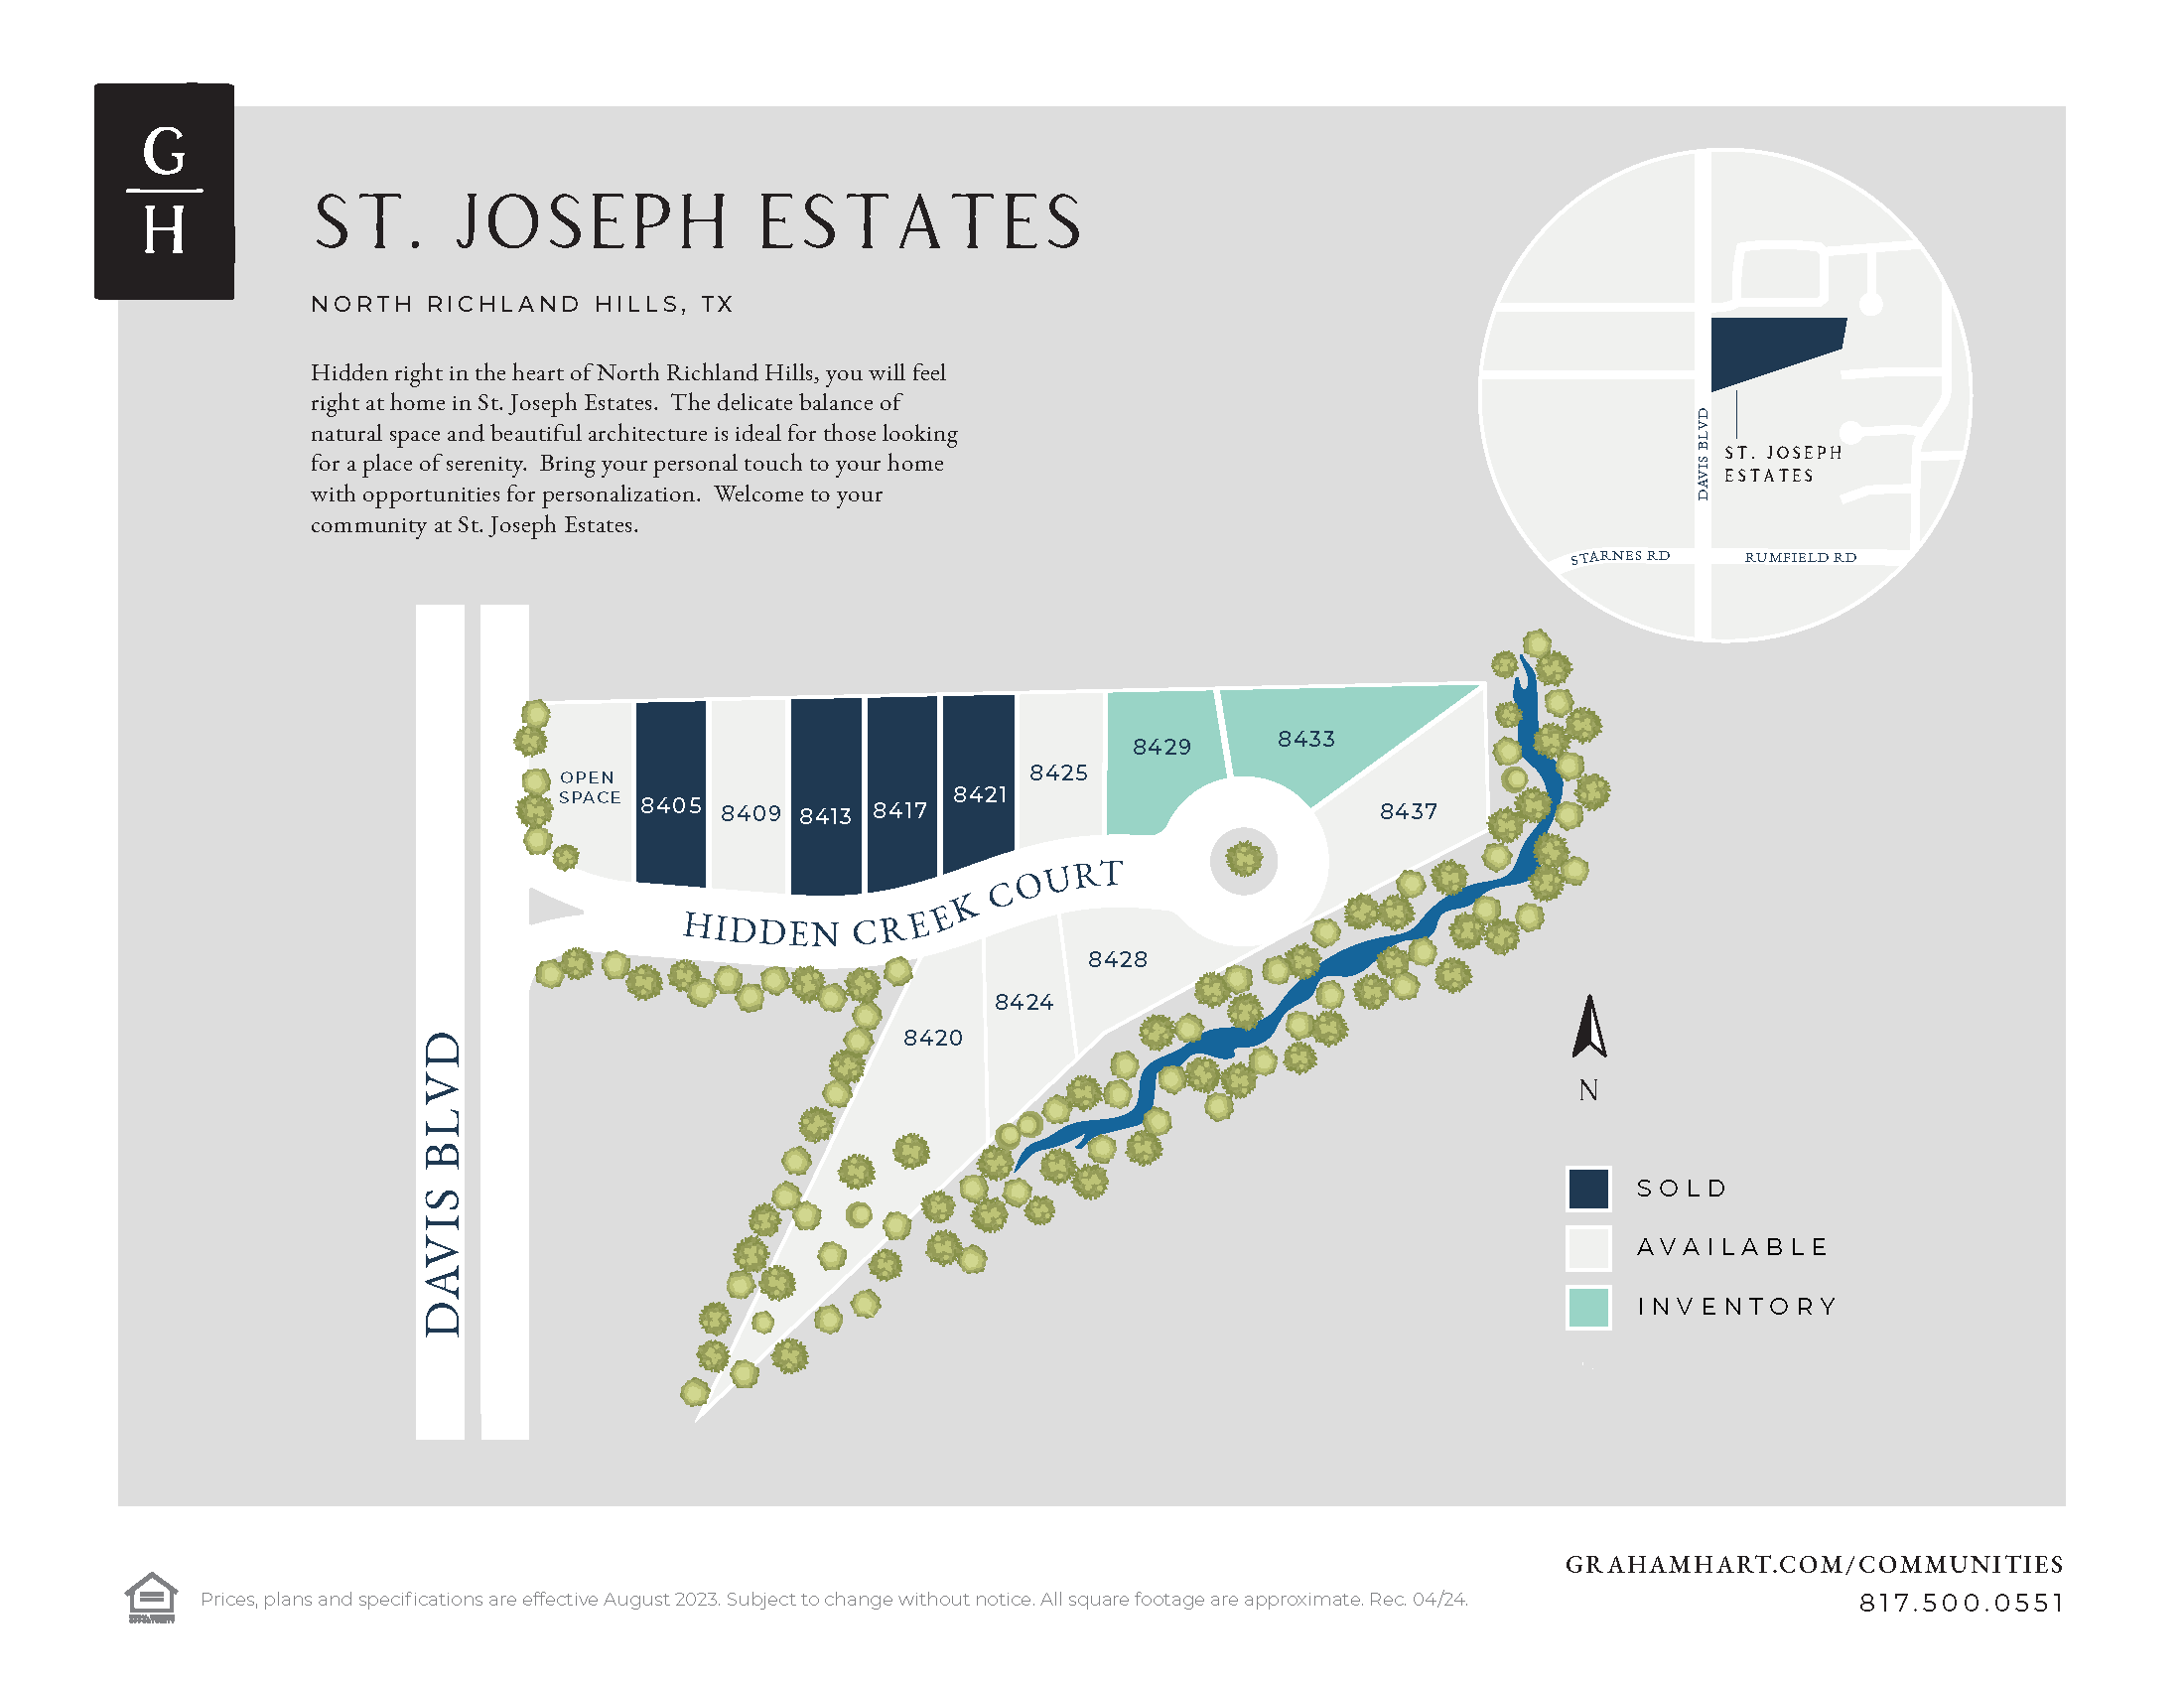 St. Joseph Estates community plat map